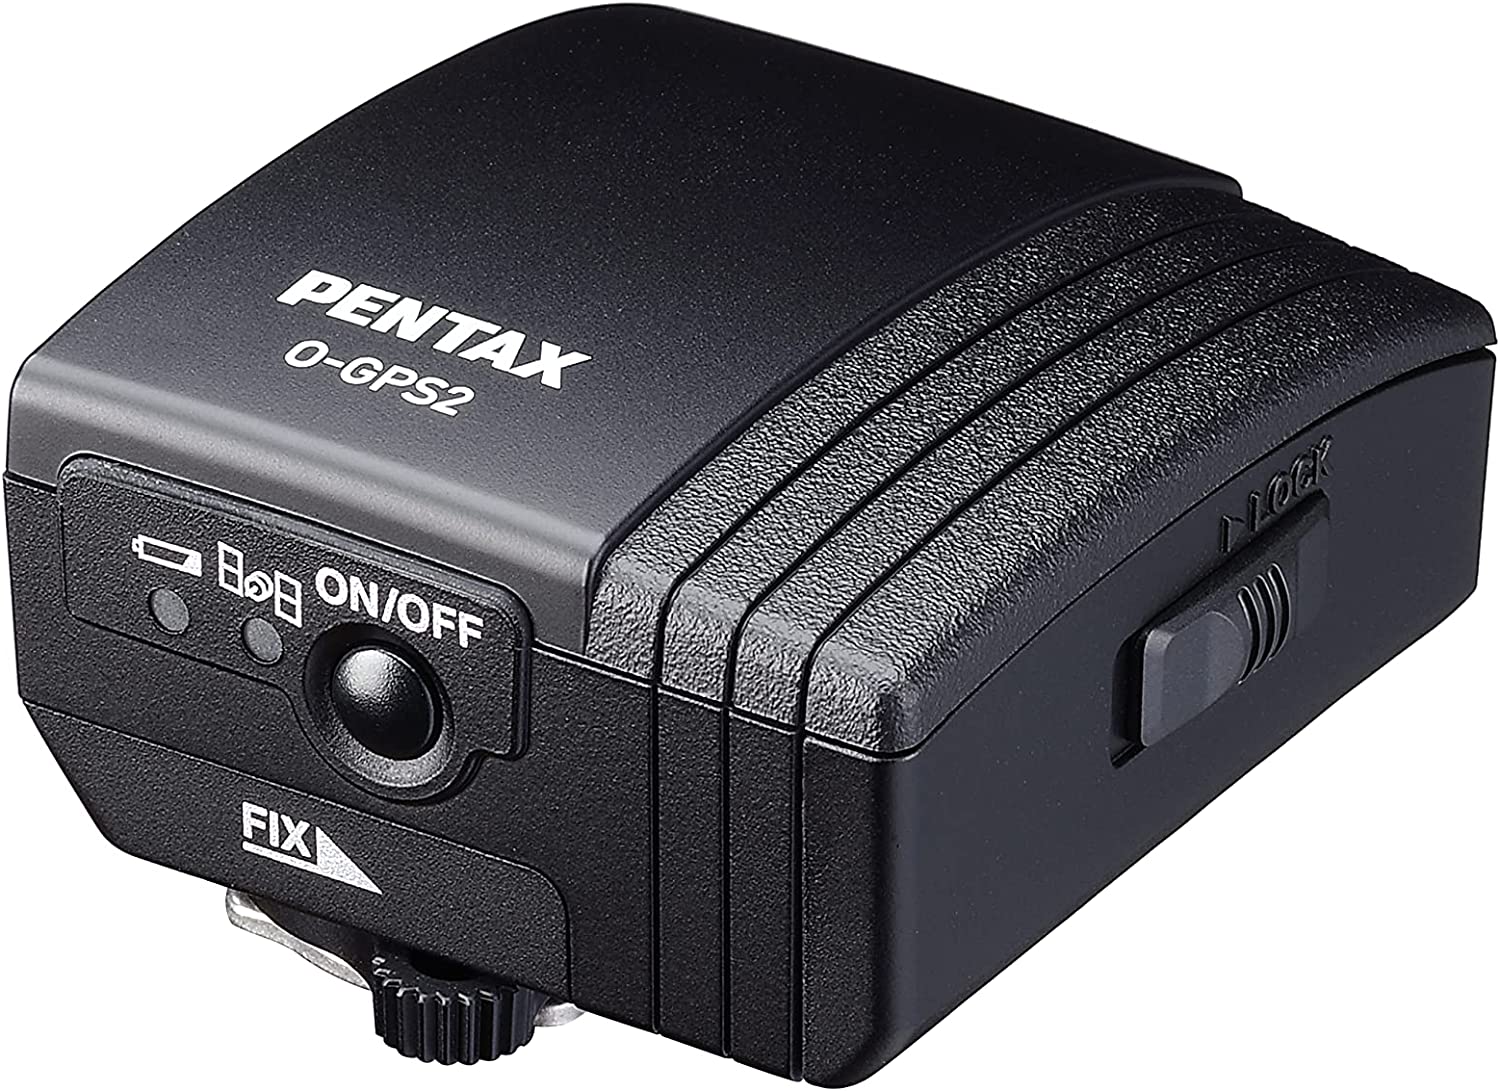 Product Image of Pentax O-GPS2 Handy GPS Unit